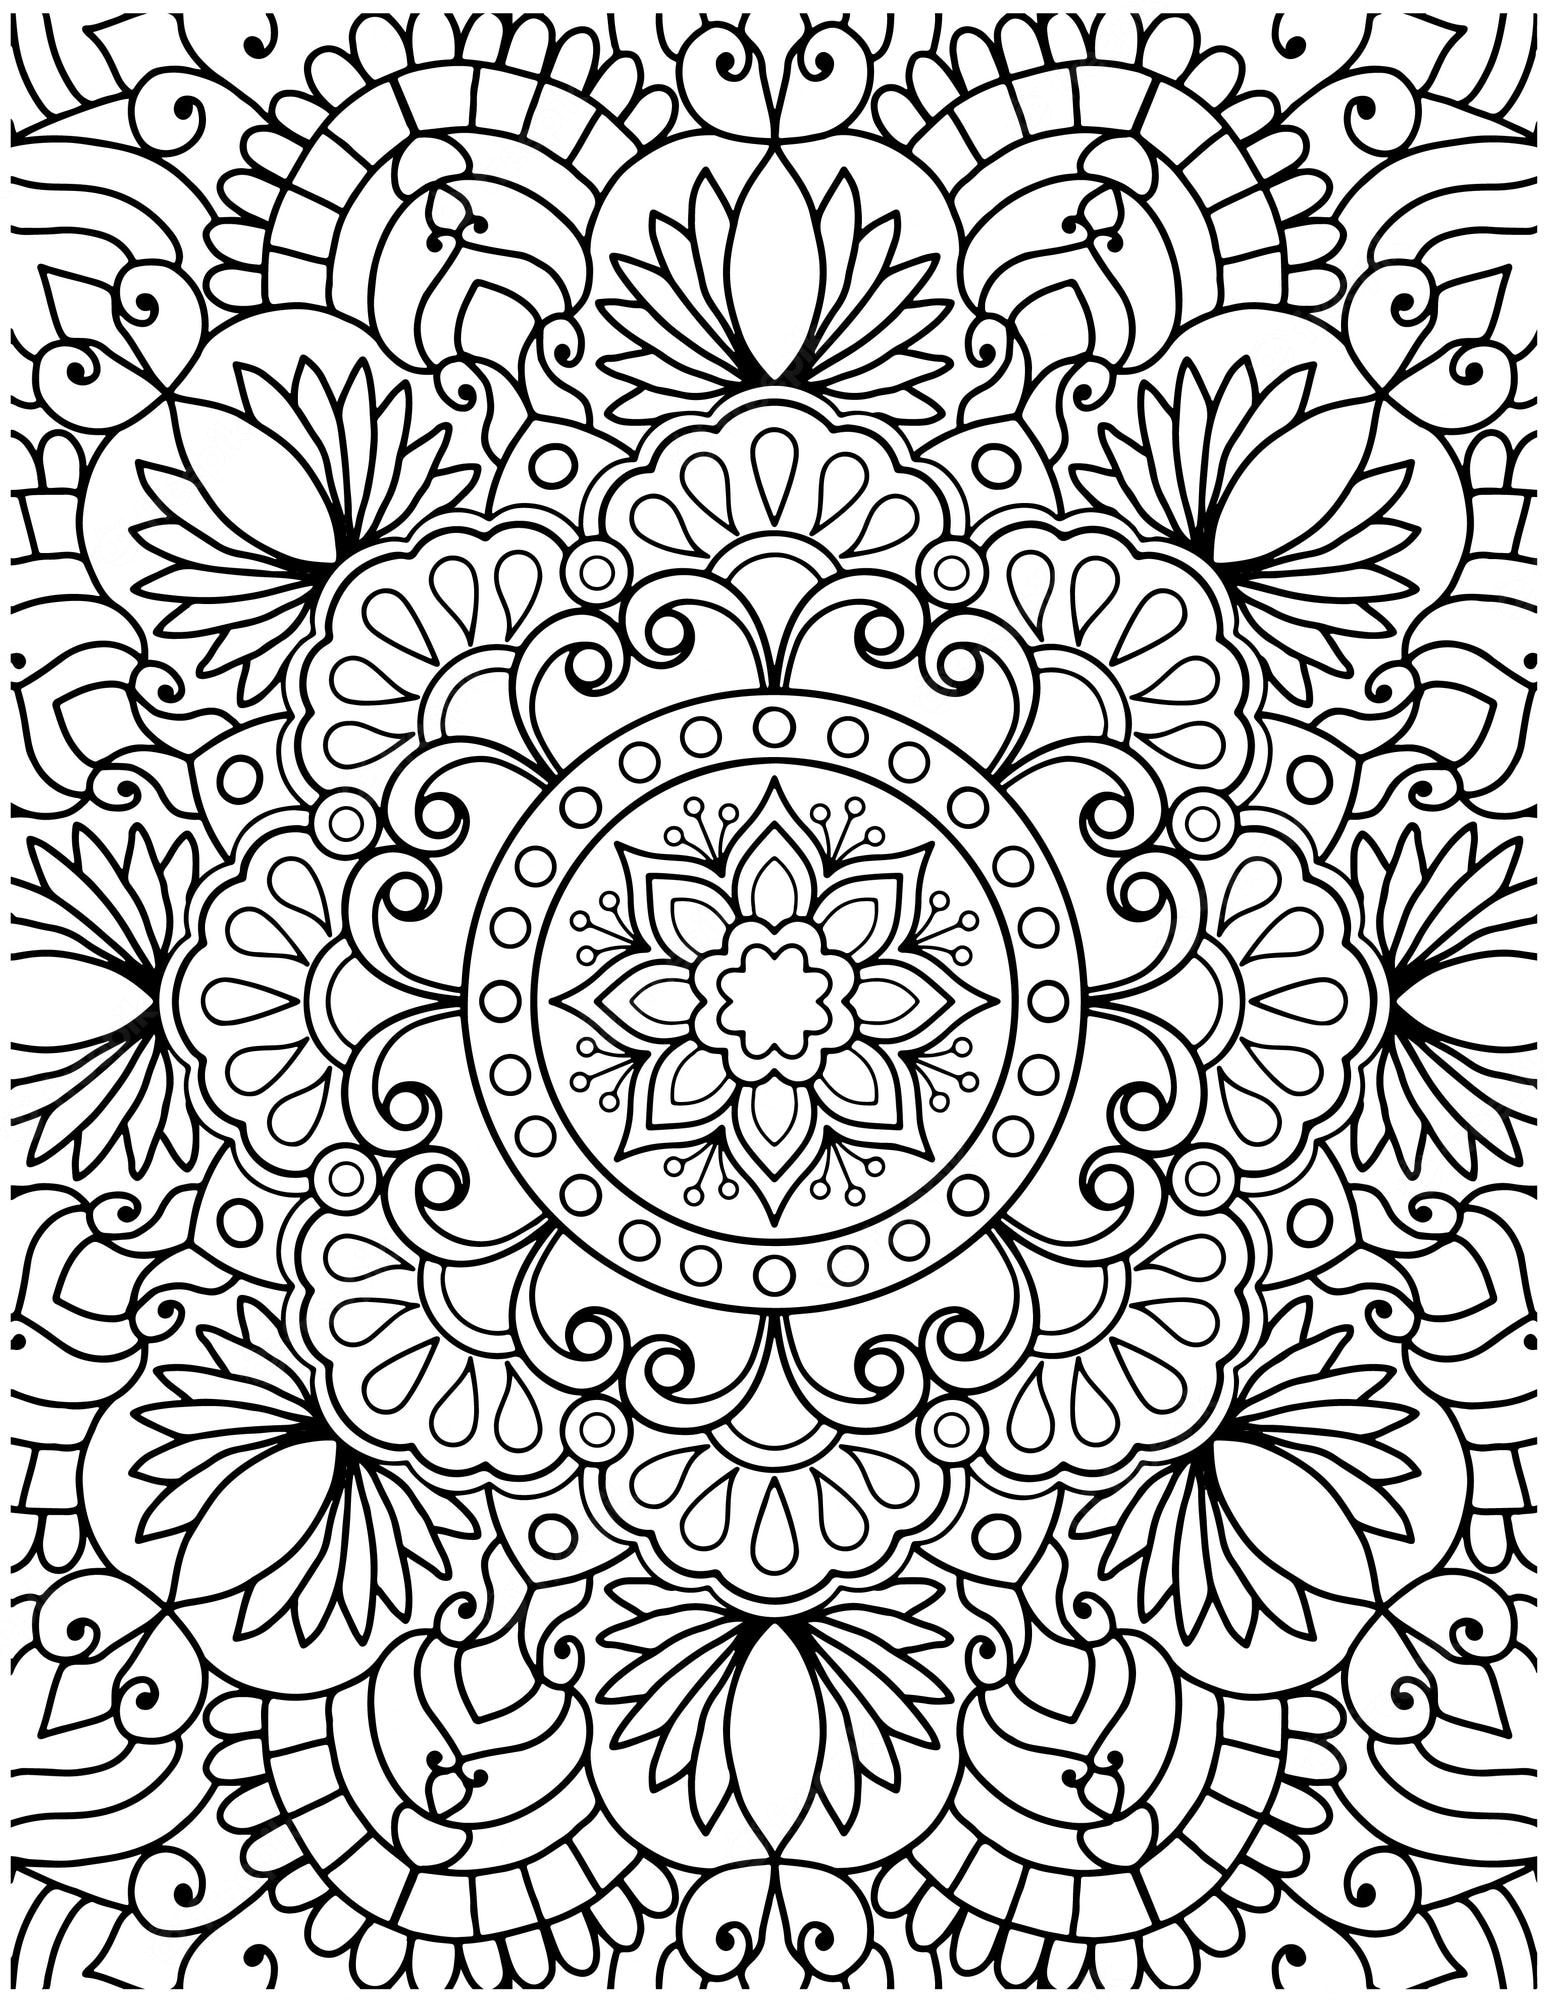 Premium Vector | Hand drawn mandala coloring pages for adult coloring book.  floral hand drawn mandala coloring page.